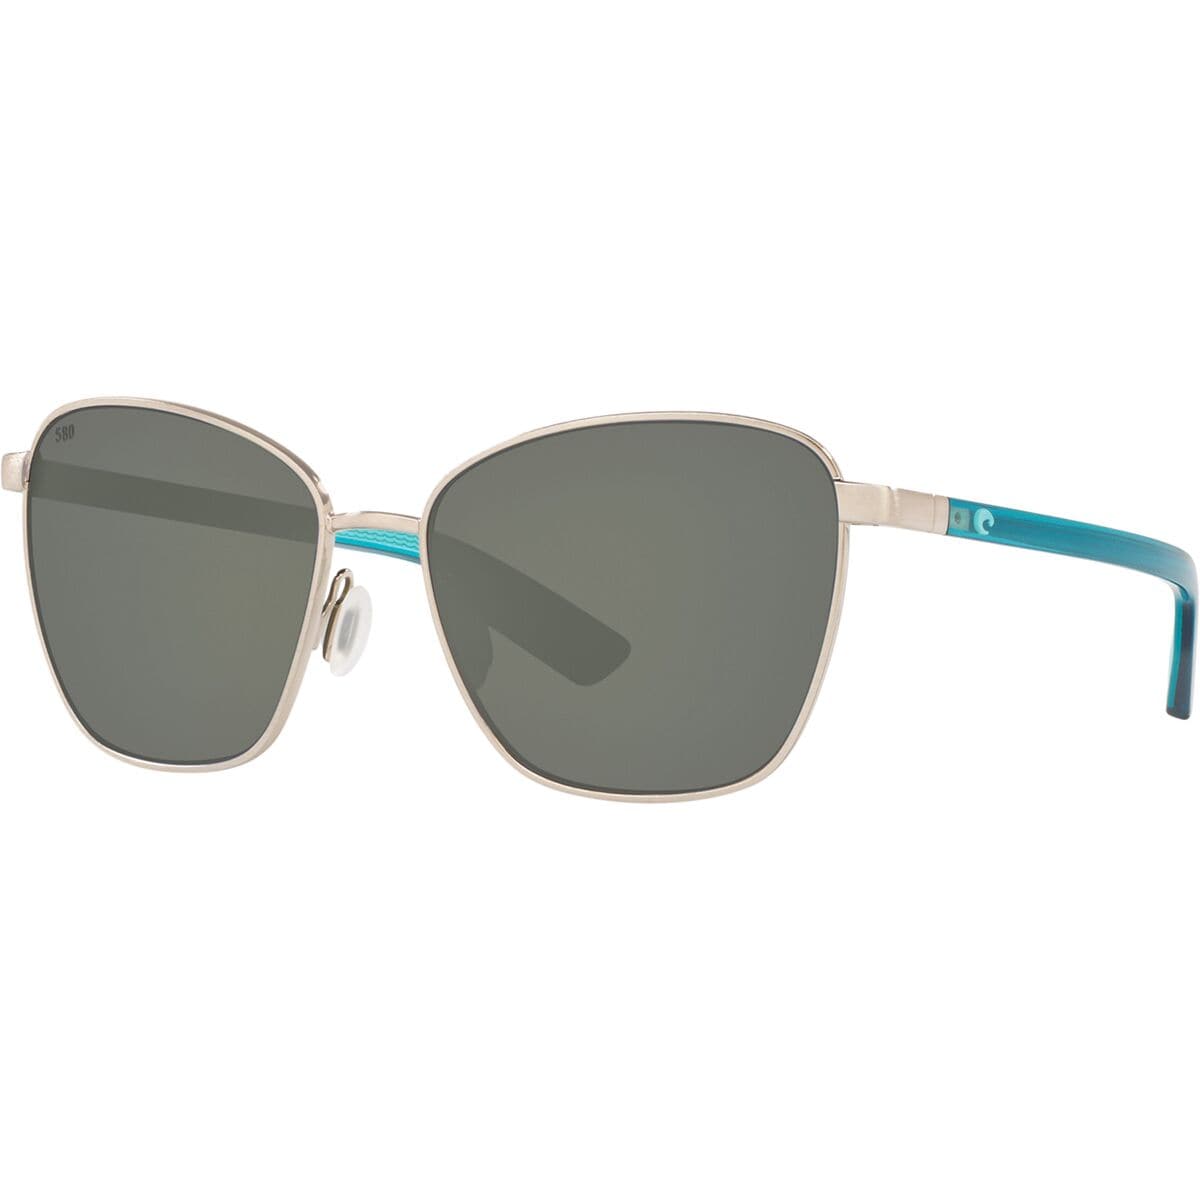 Costa Paloma 580G Polarized Sunglasses